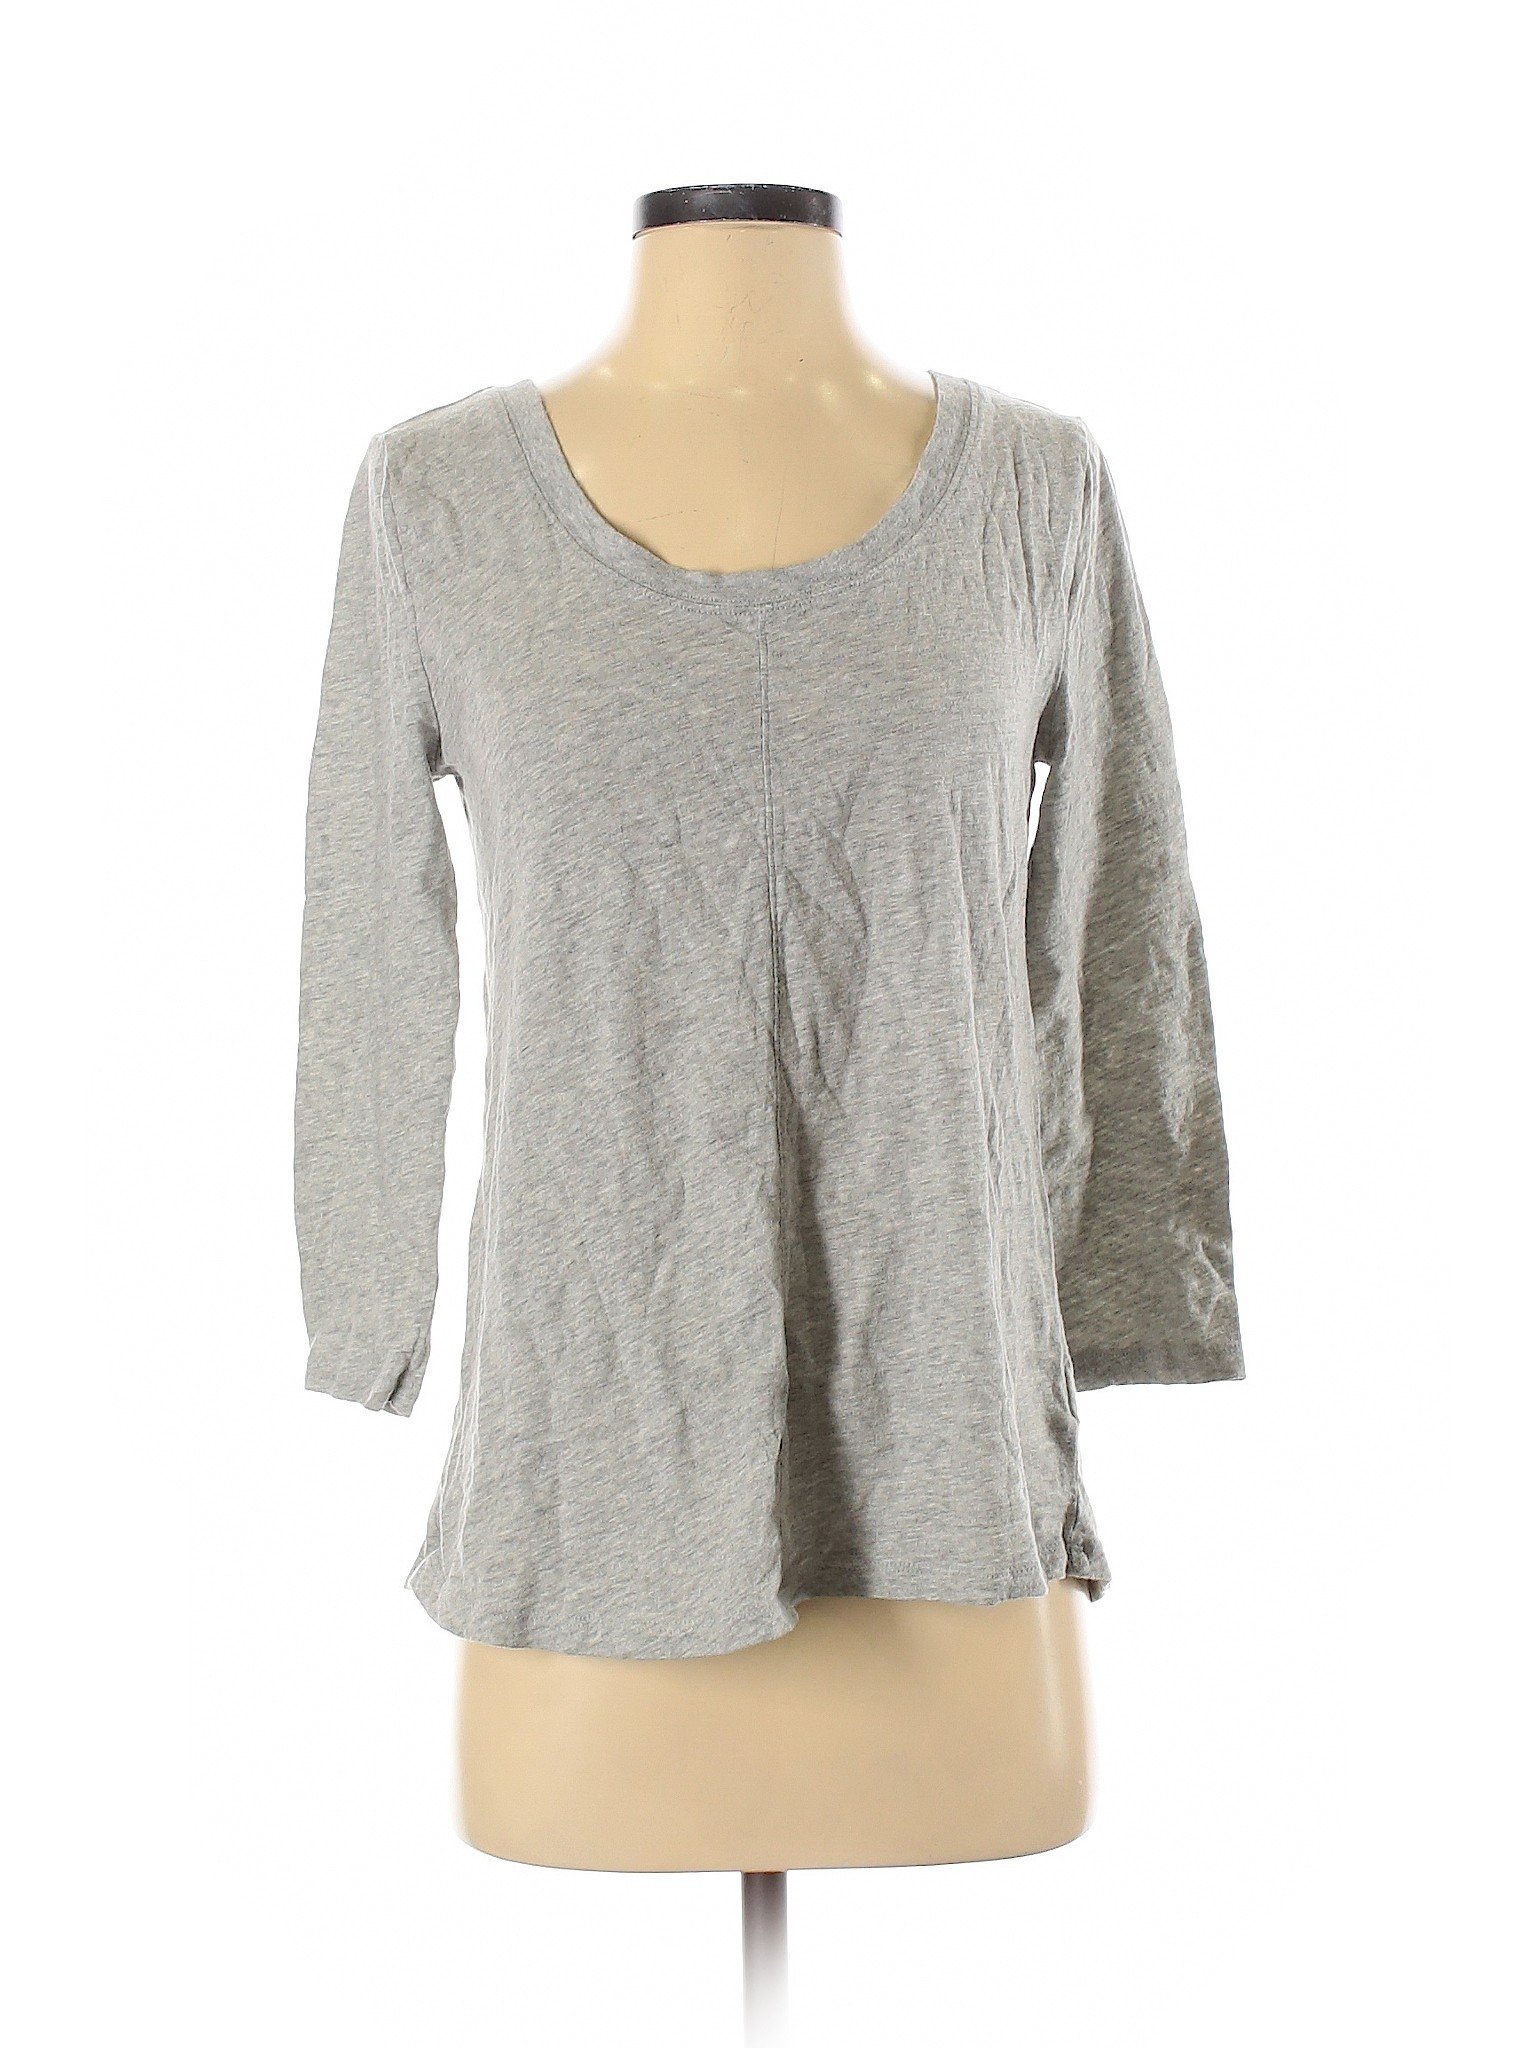 Gap Outlet Women Gray 3/4 Sleeve T-Shirt S | eBay